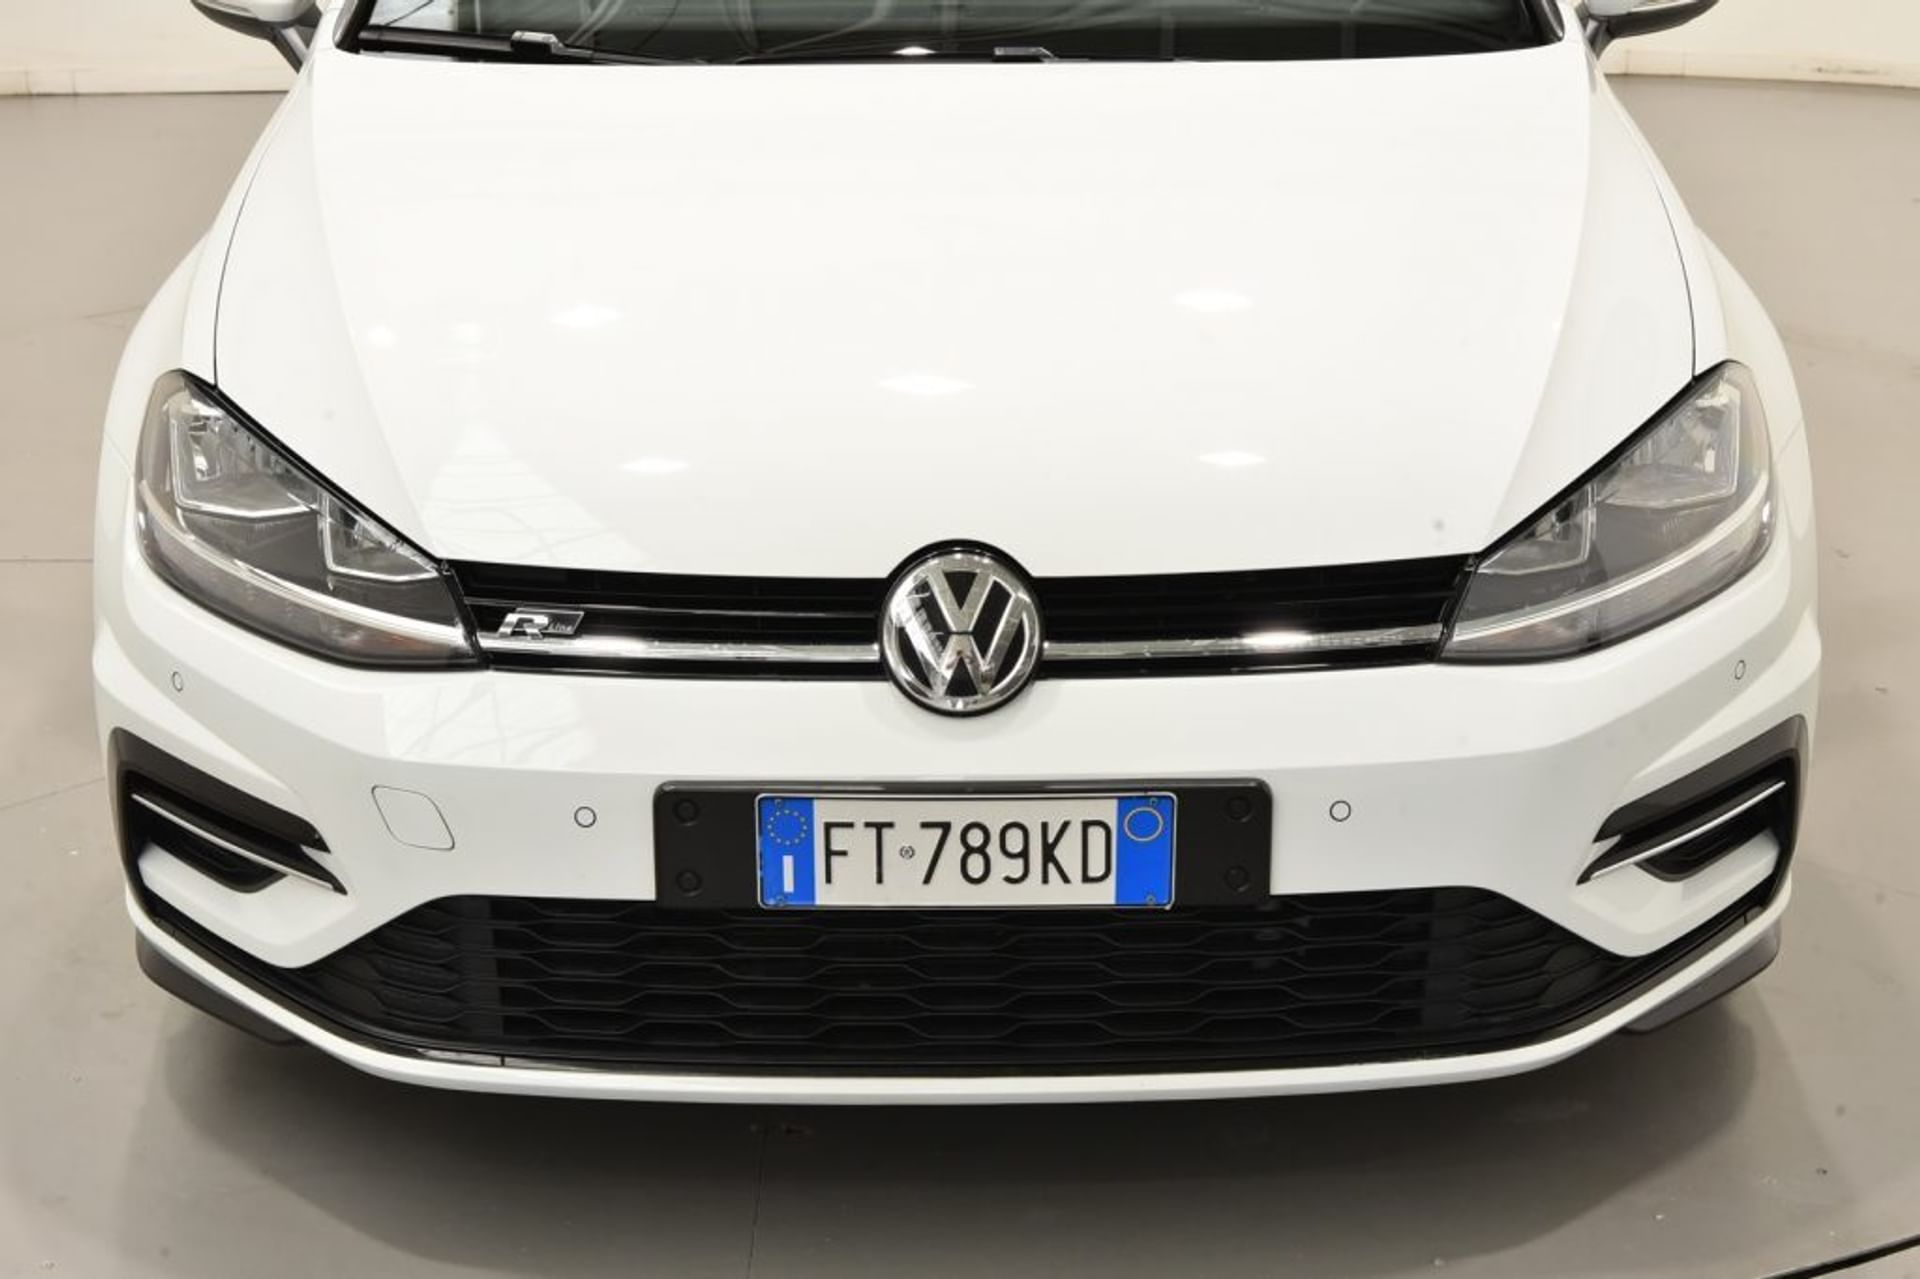 Volkswagen 1.6 TDI 115 CV - Anteriore